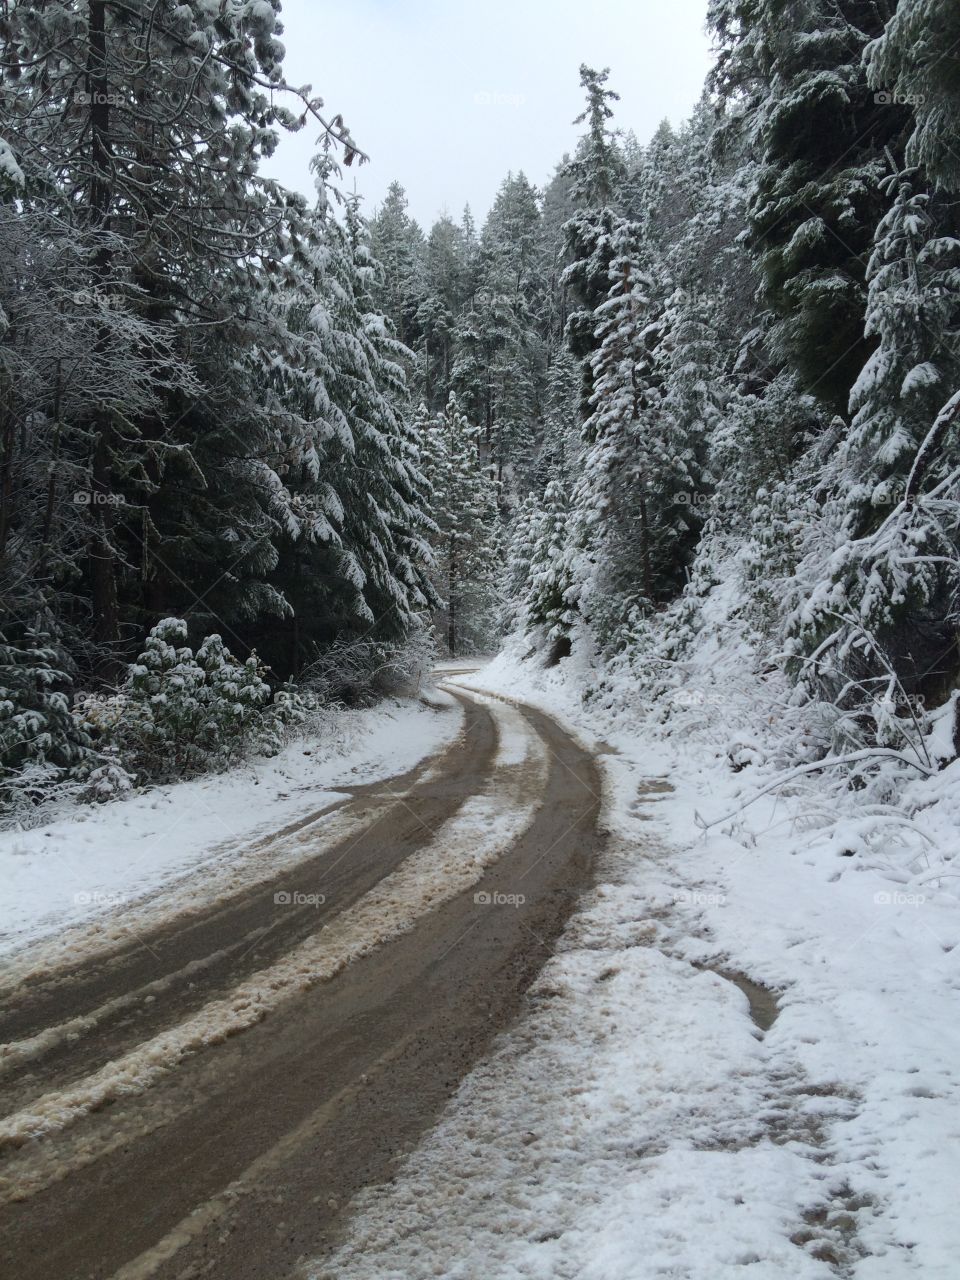 Snowy road 